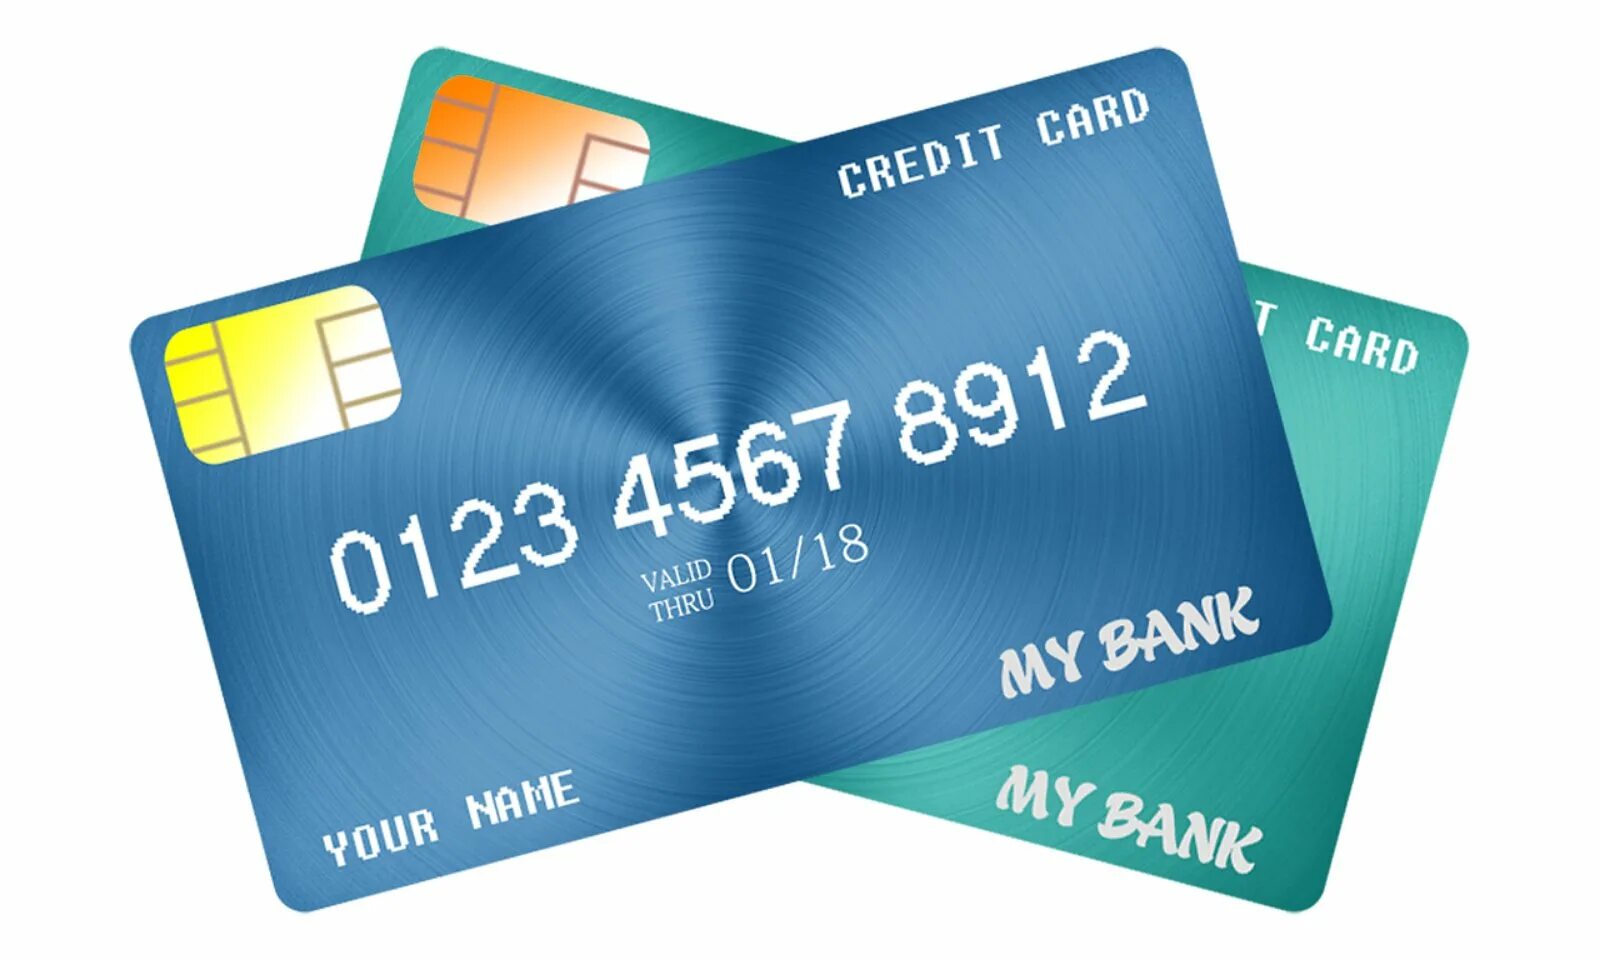 Bank karta38. Кредитная карта. Банковская карточка. Кредитная карточка. Карта кредитка.